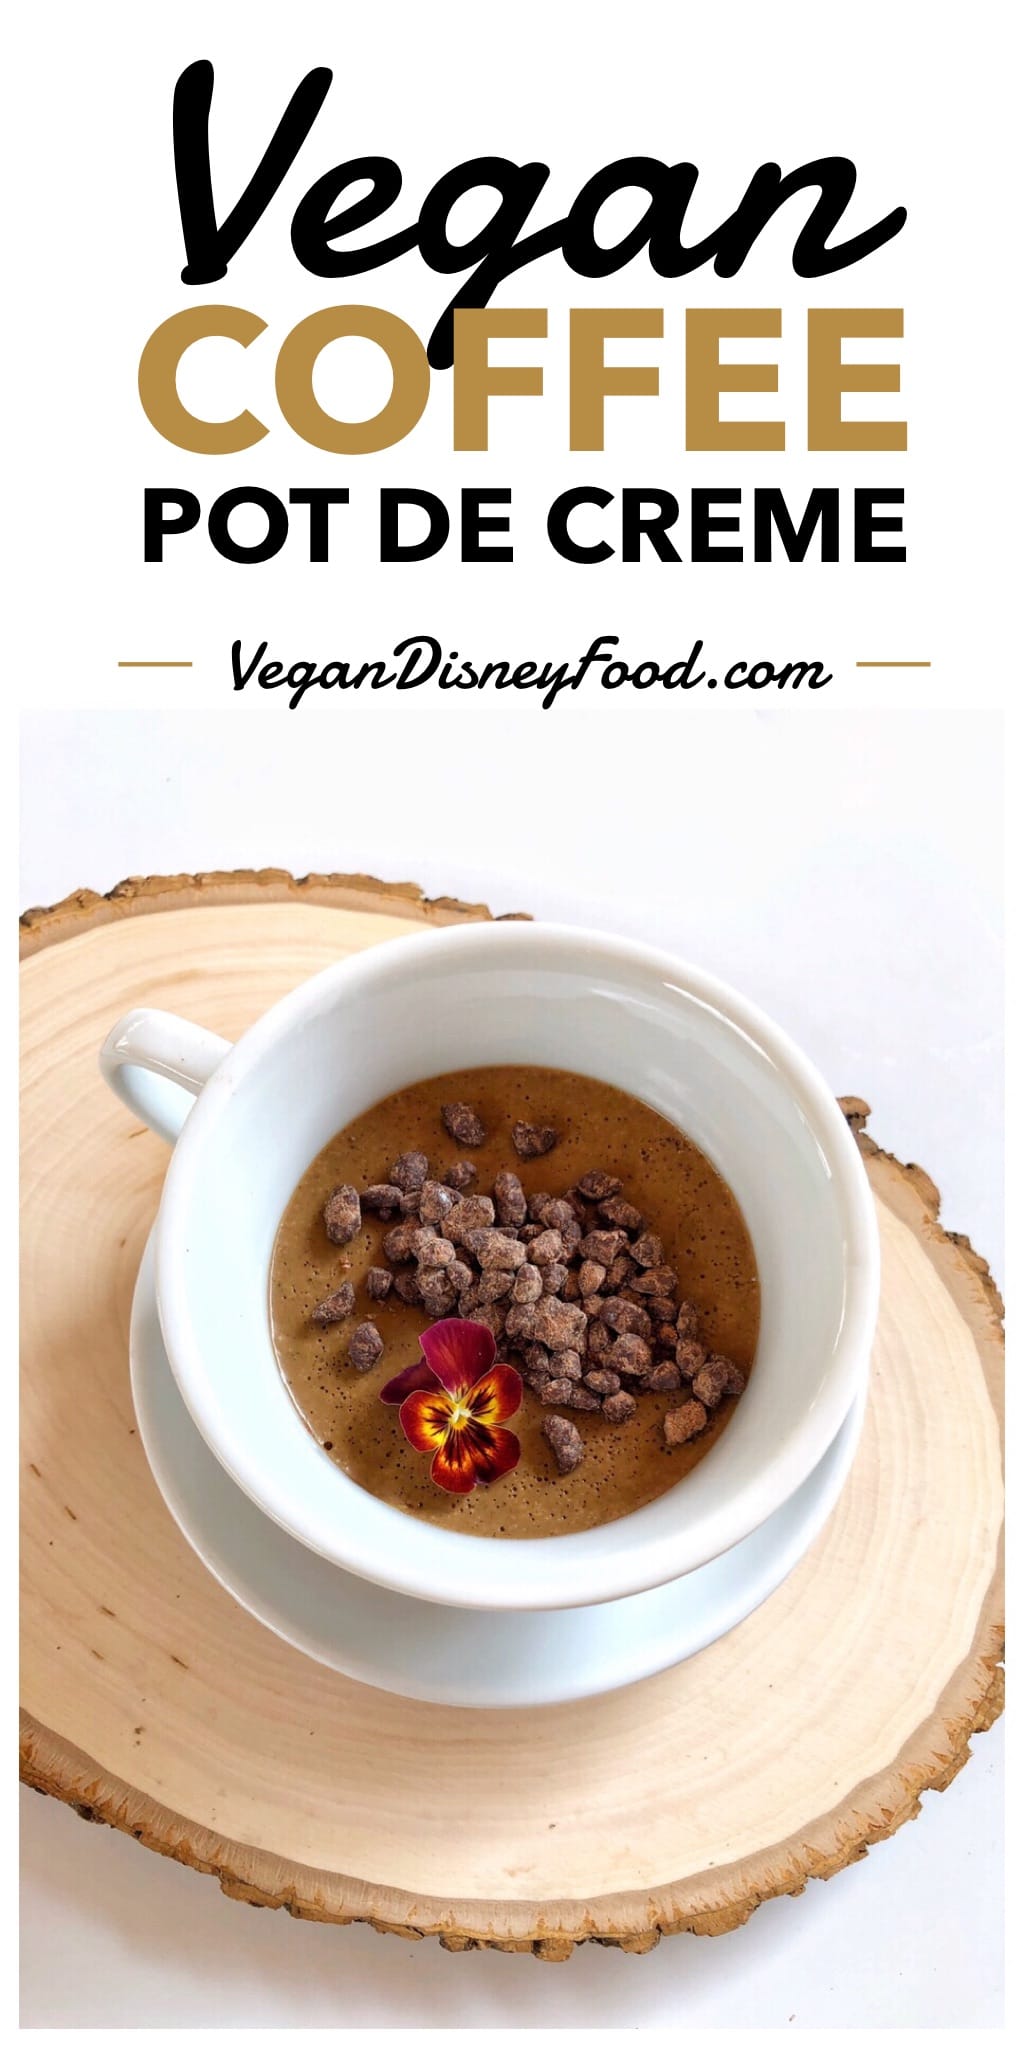 Vegan Coffee Pot de Creme at Cinderella’s Royal Table in the Magic Kingdom at Walt Disney World